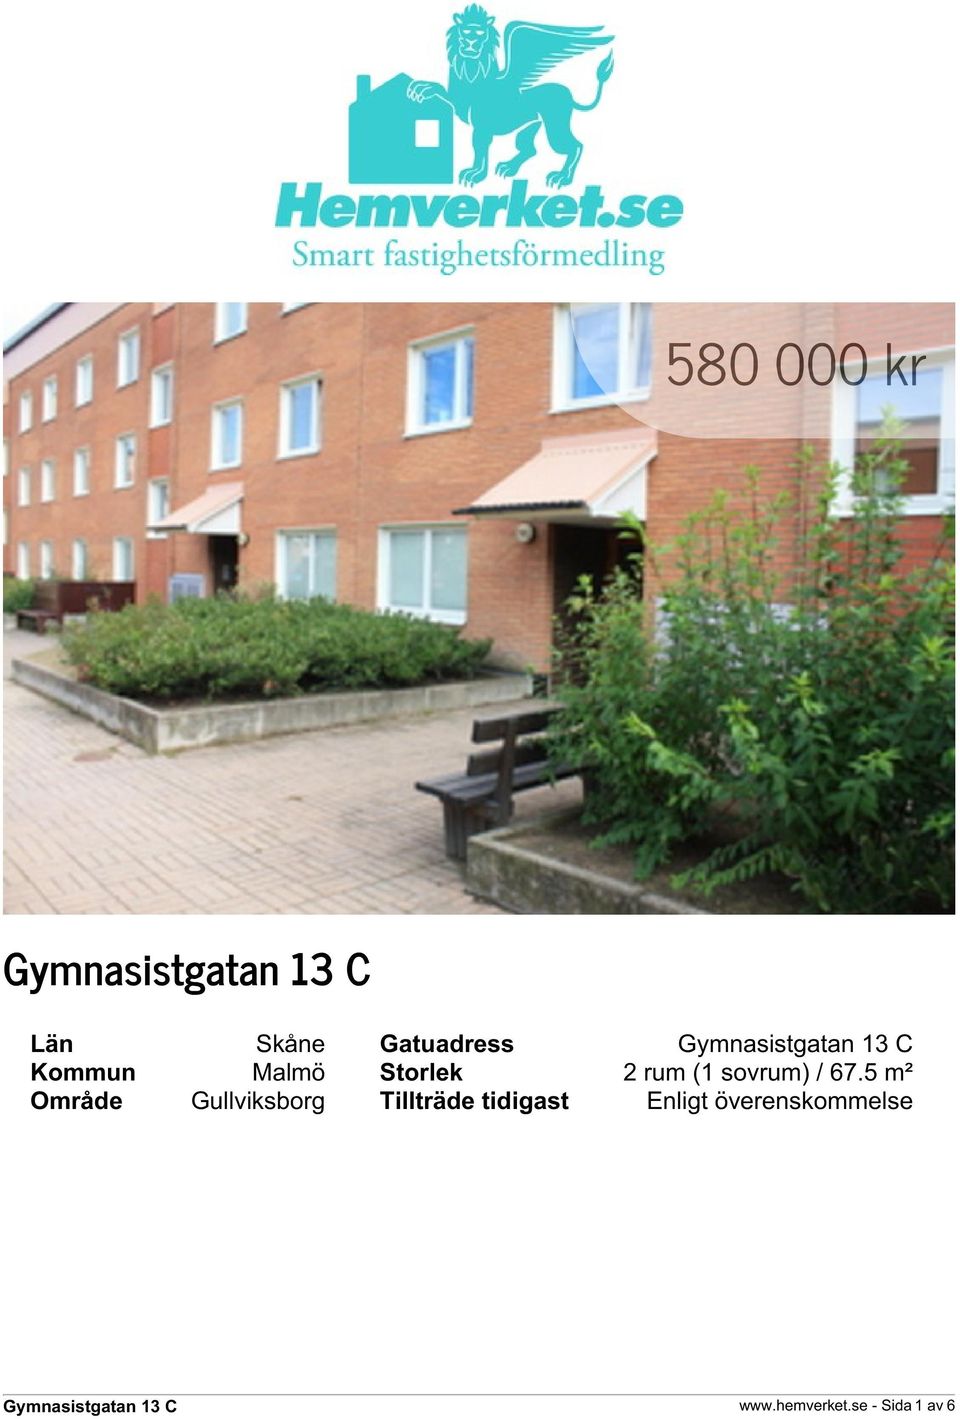 5 m² Område Gullviksborg Tillträde